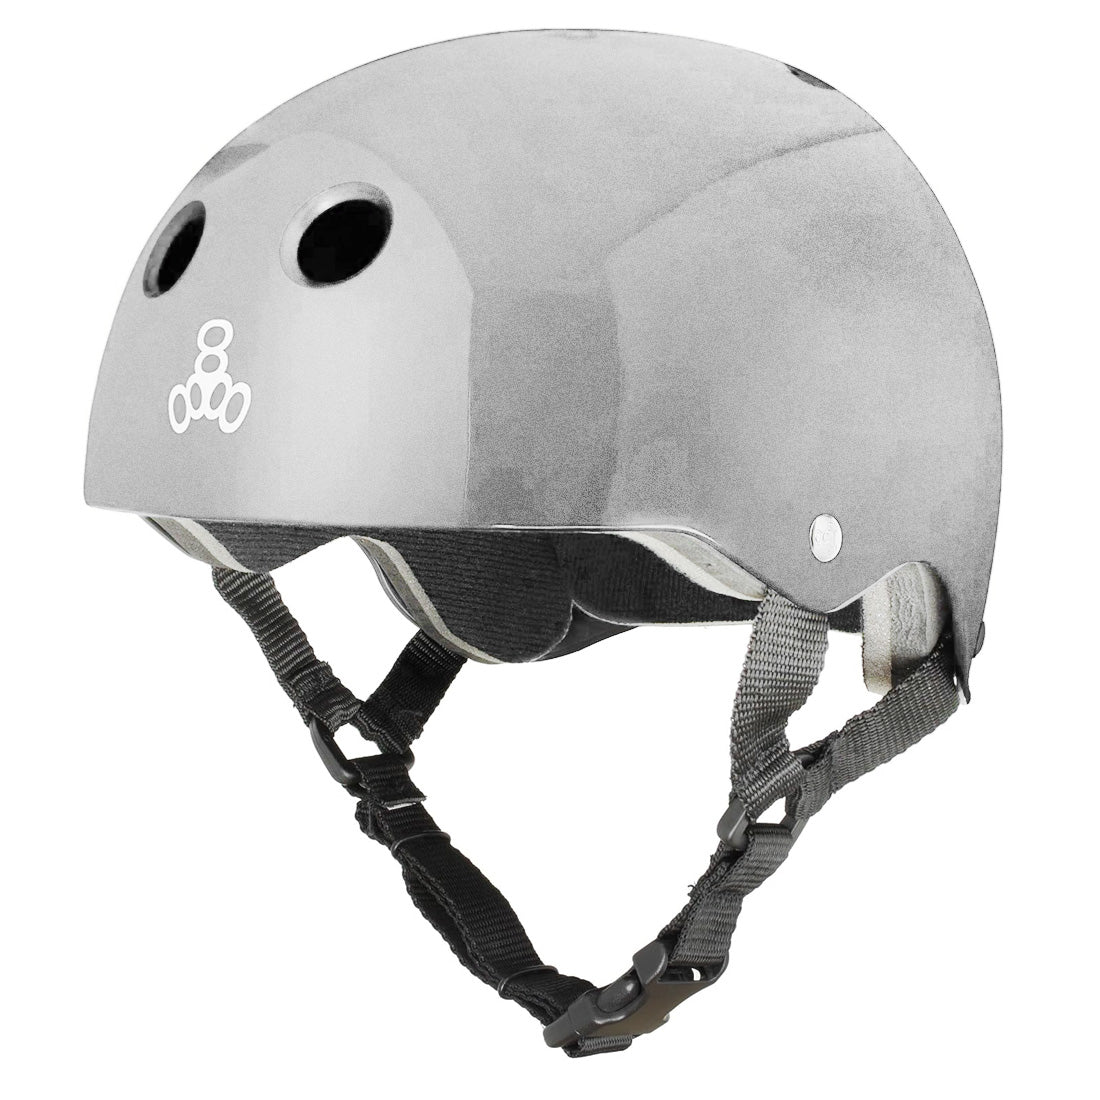 Triple 8 Skate SS Helmet - Silver Metallic Gloss Helmets